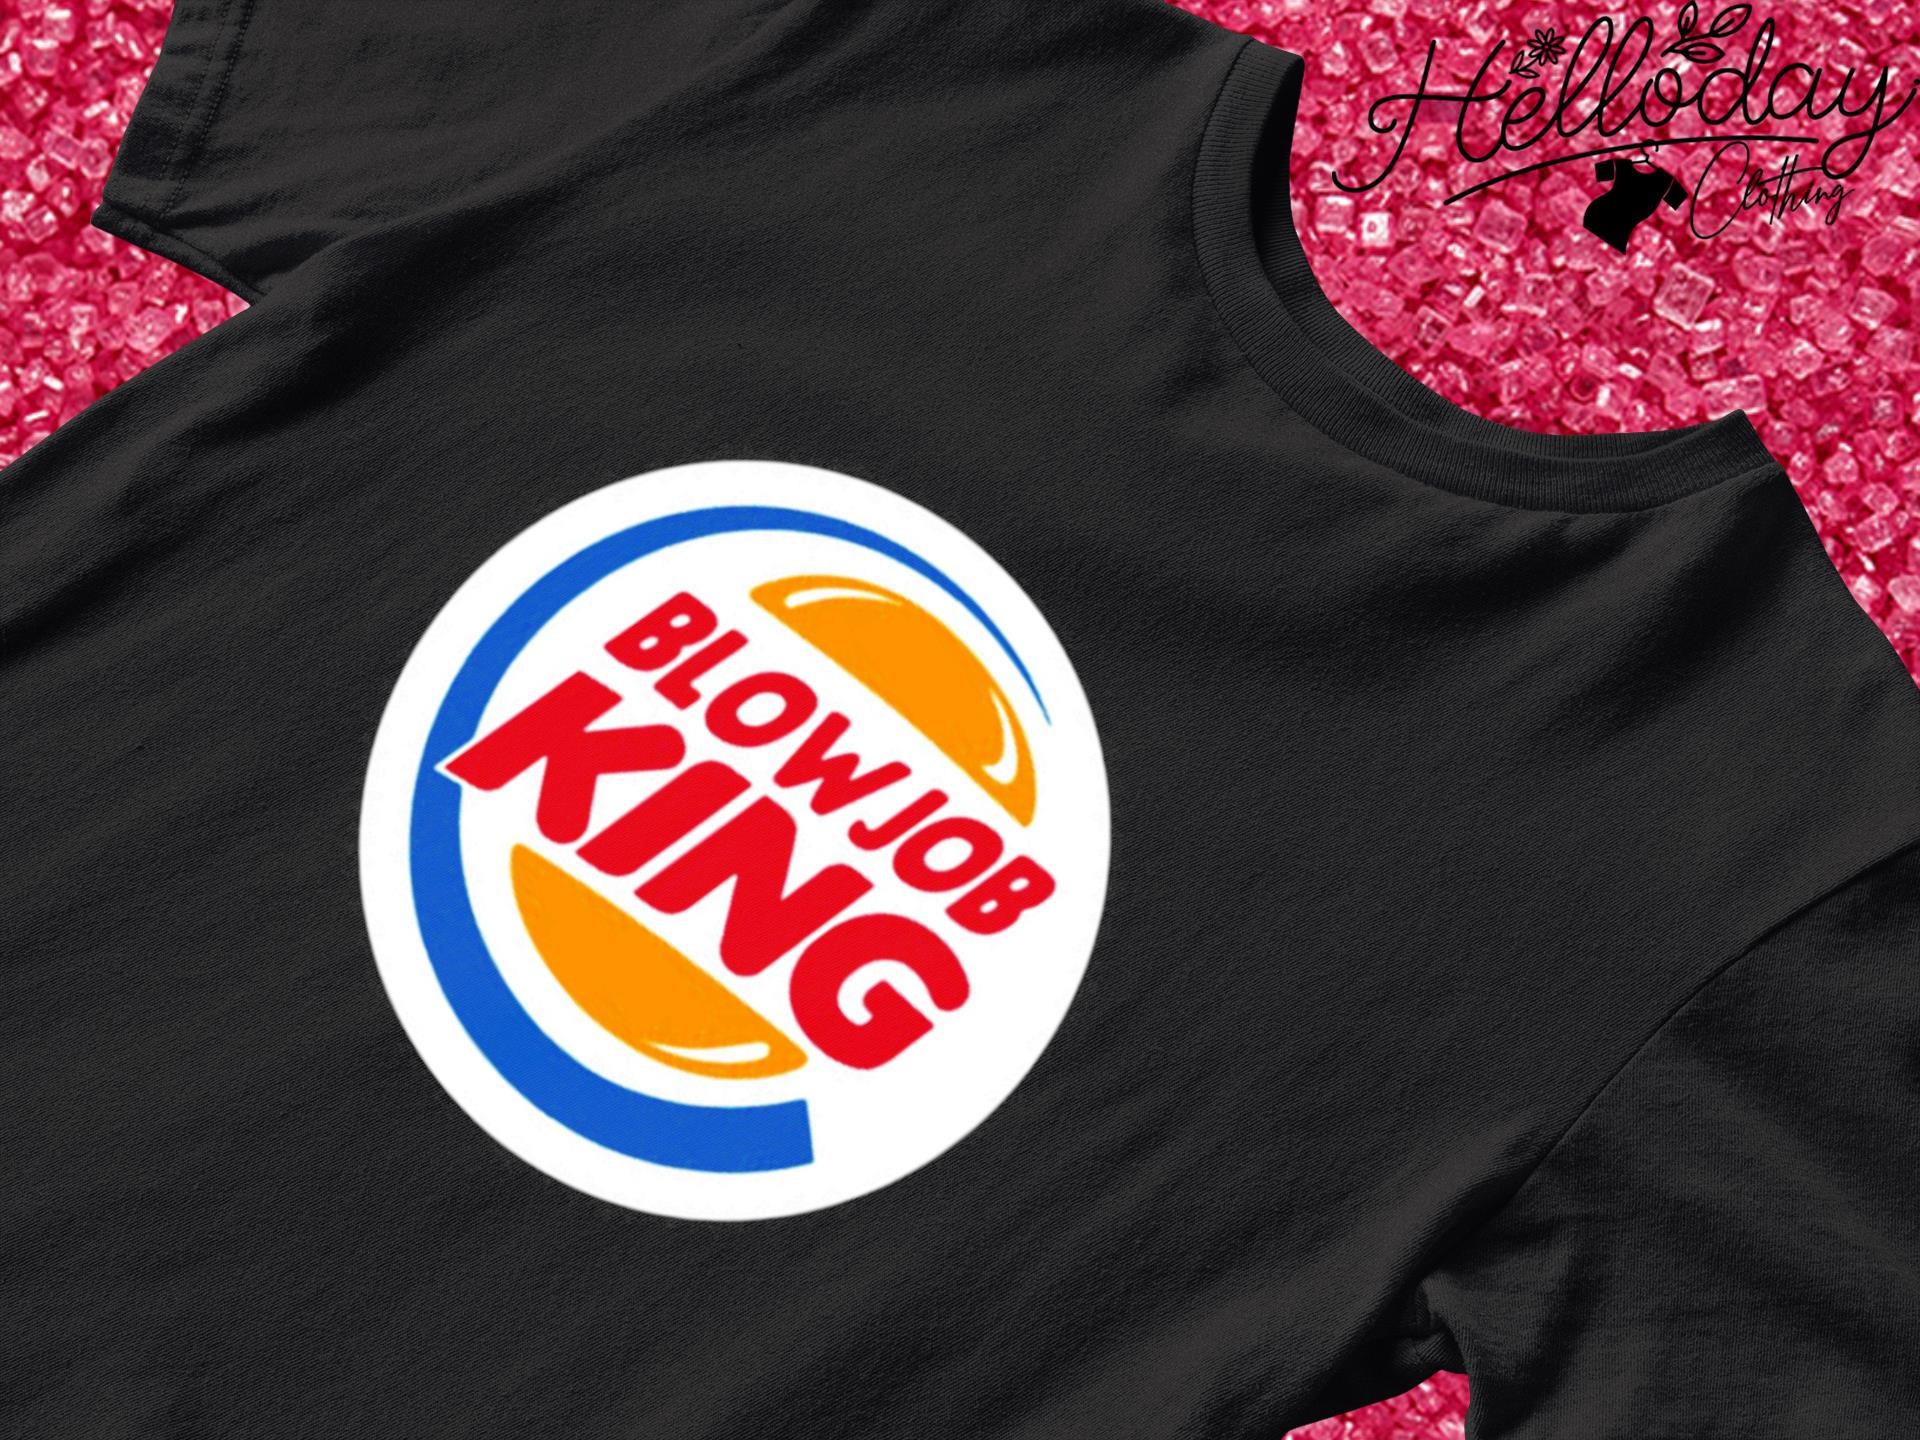 Blowjob King Burger King shirt